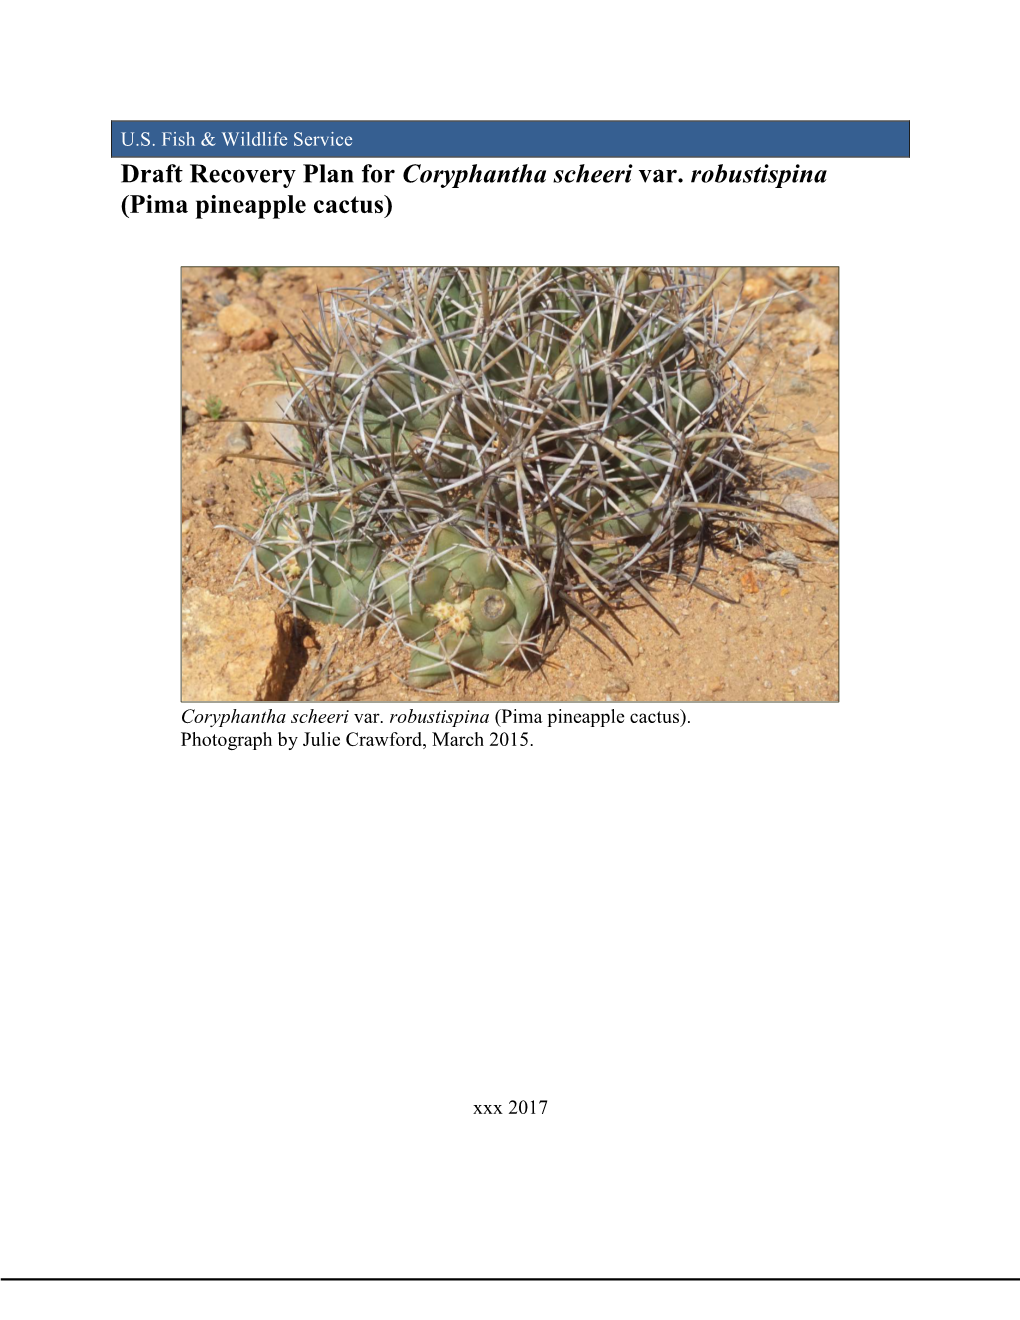 Draft Recovery Plan for Coryphantha Scheeri Var. Robustispina (Pima Pineapple Cactus)